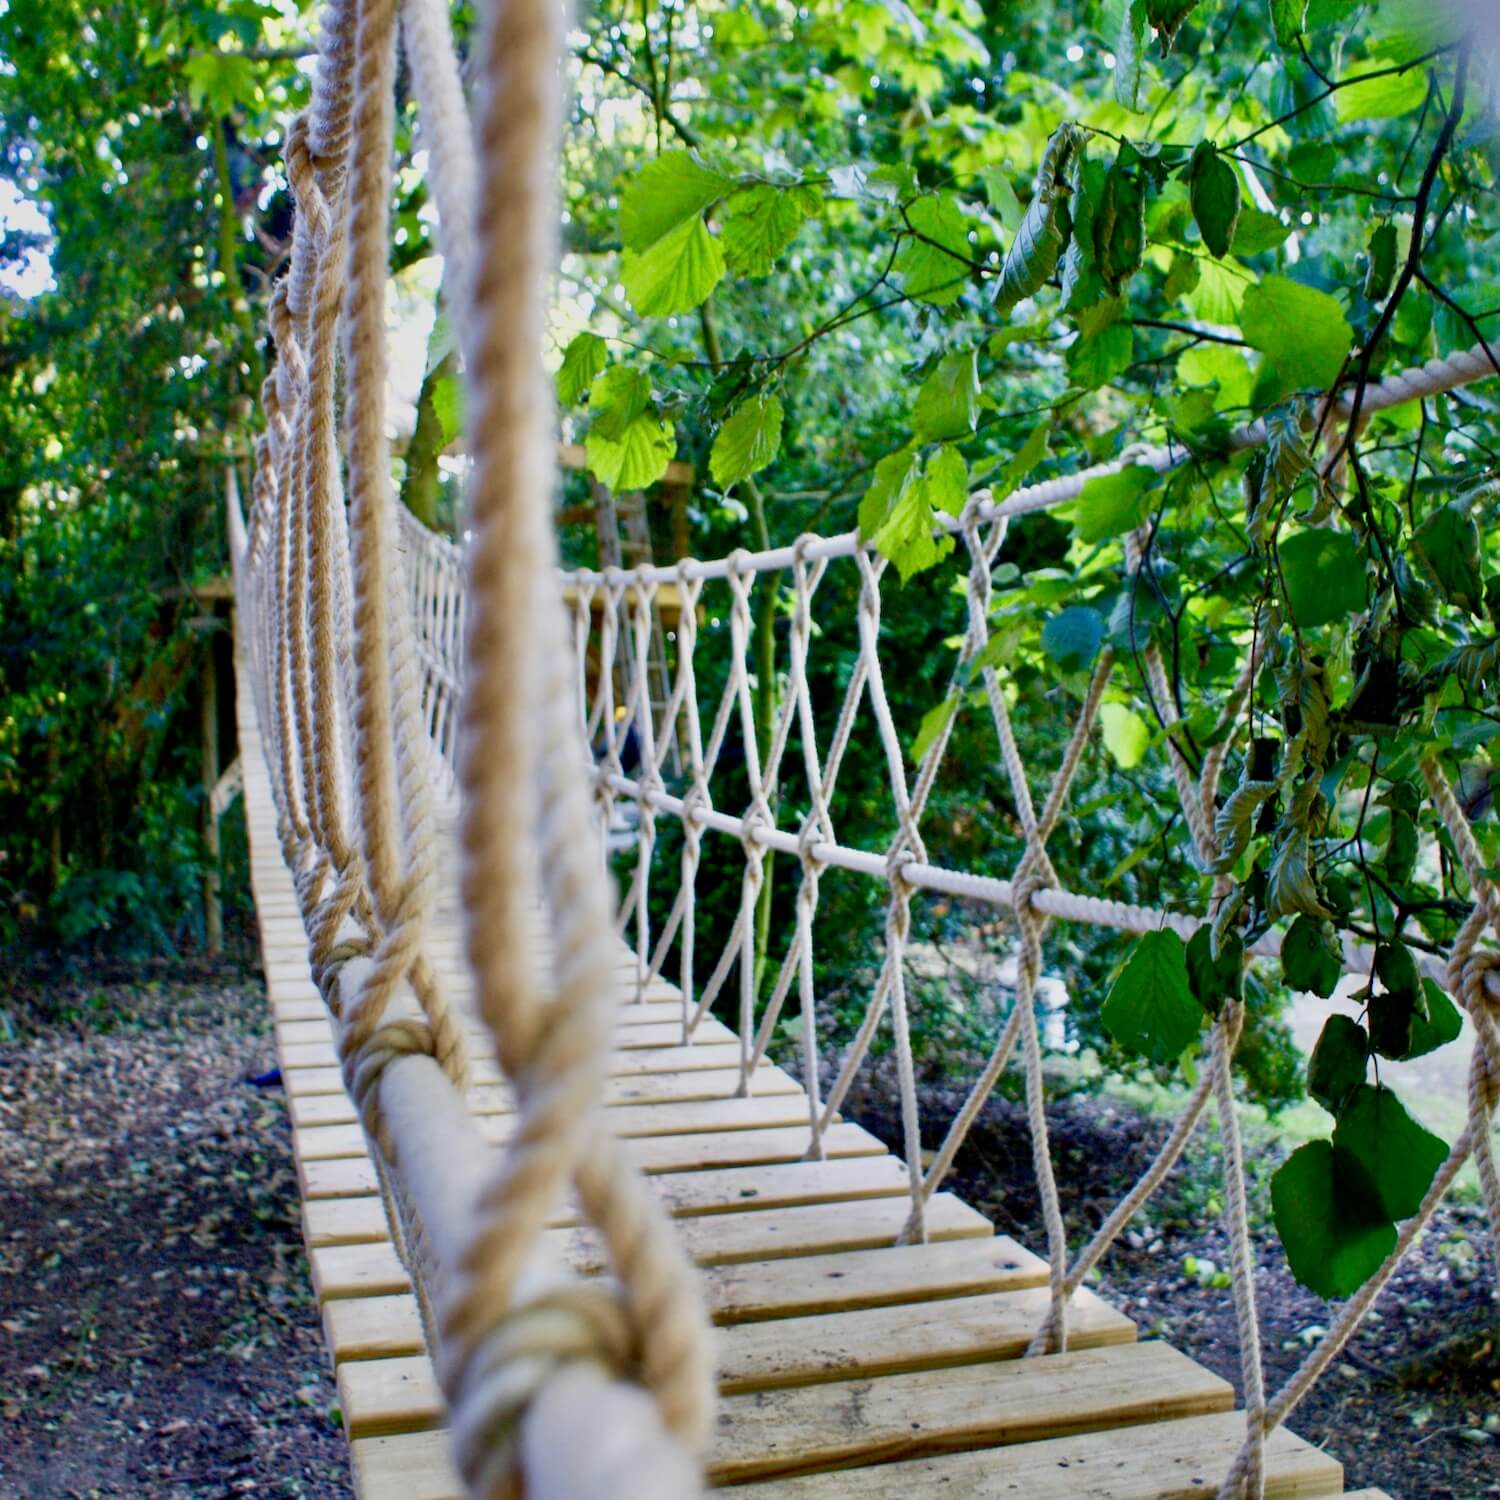 Rope-Bridge-and-rope-work-by-Treehouse-Life-Ltd.jpeg